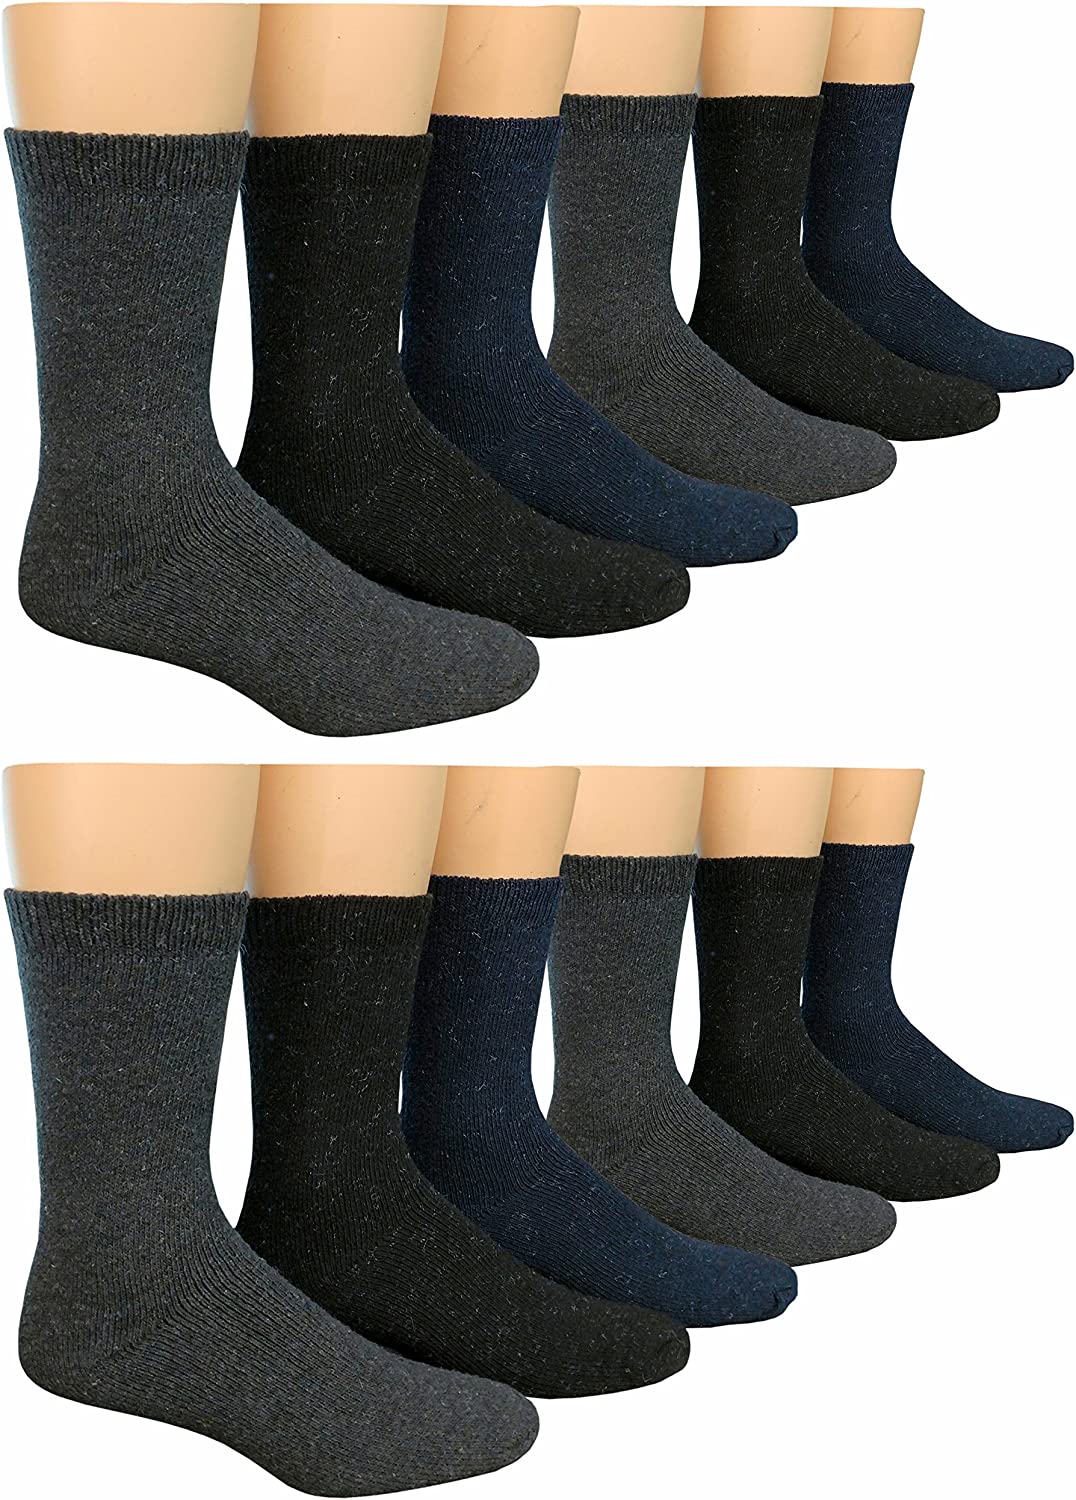 SOCKS'NBULK 12 Pairs of Mens Heavy Duty Wool Blend Winter Warm Work Socks - image 1 of 4